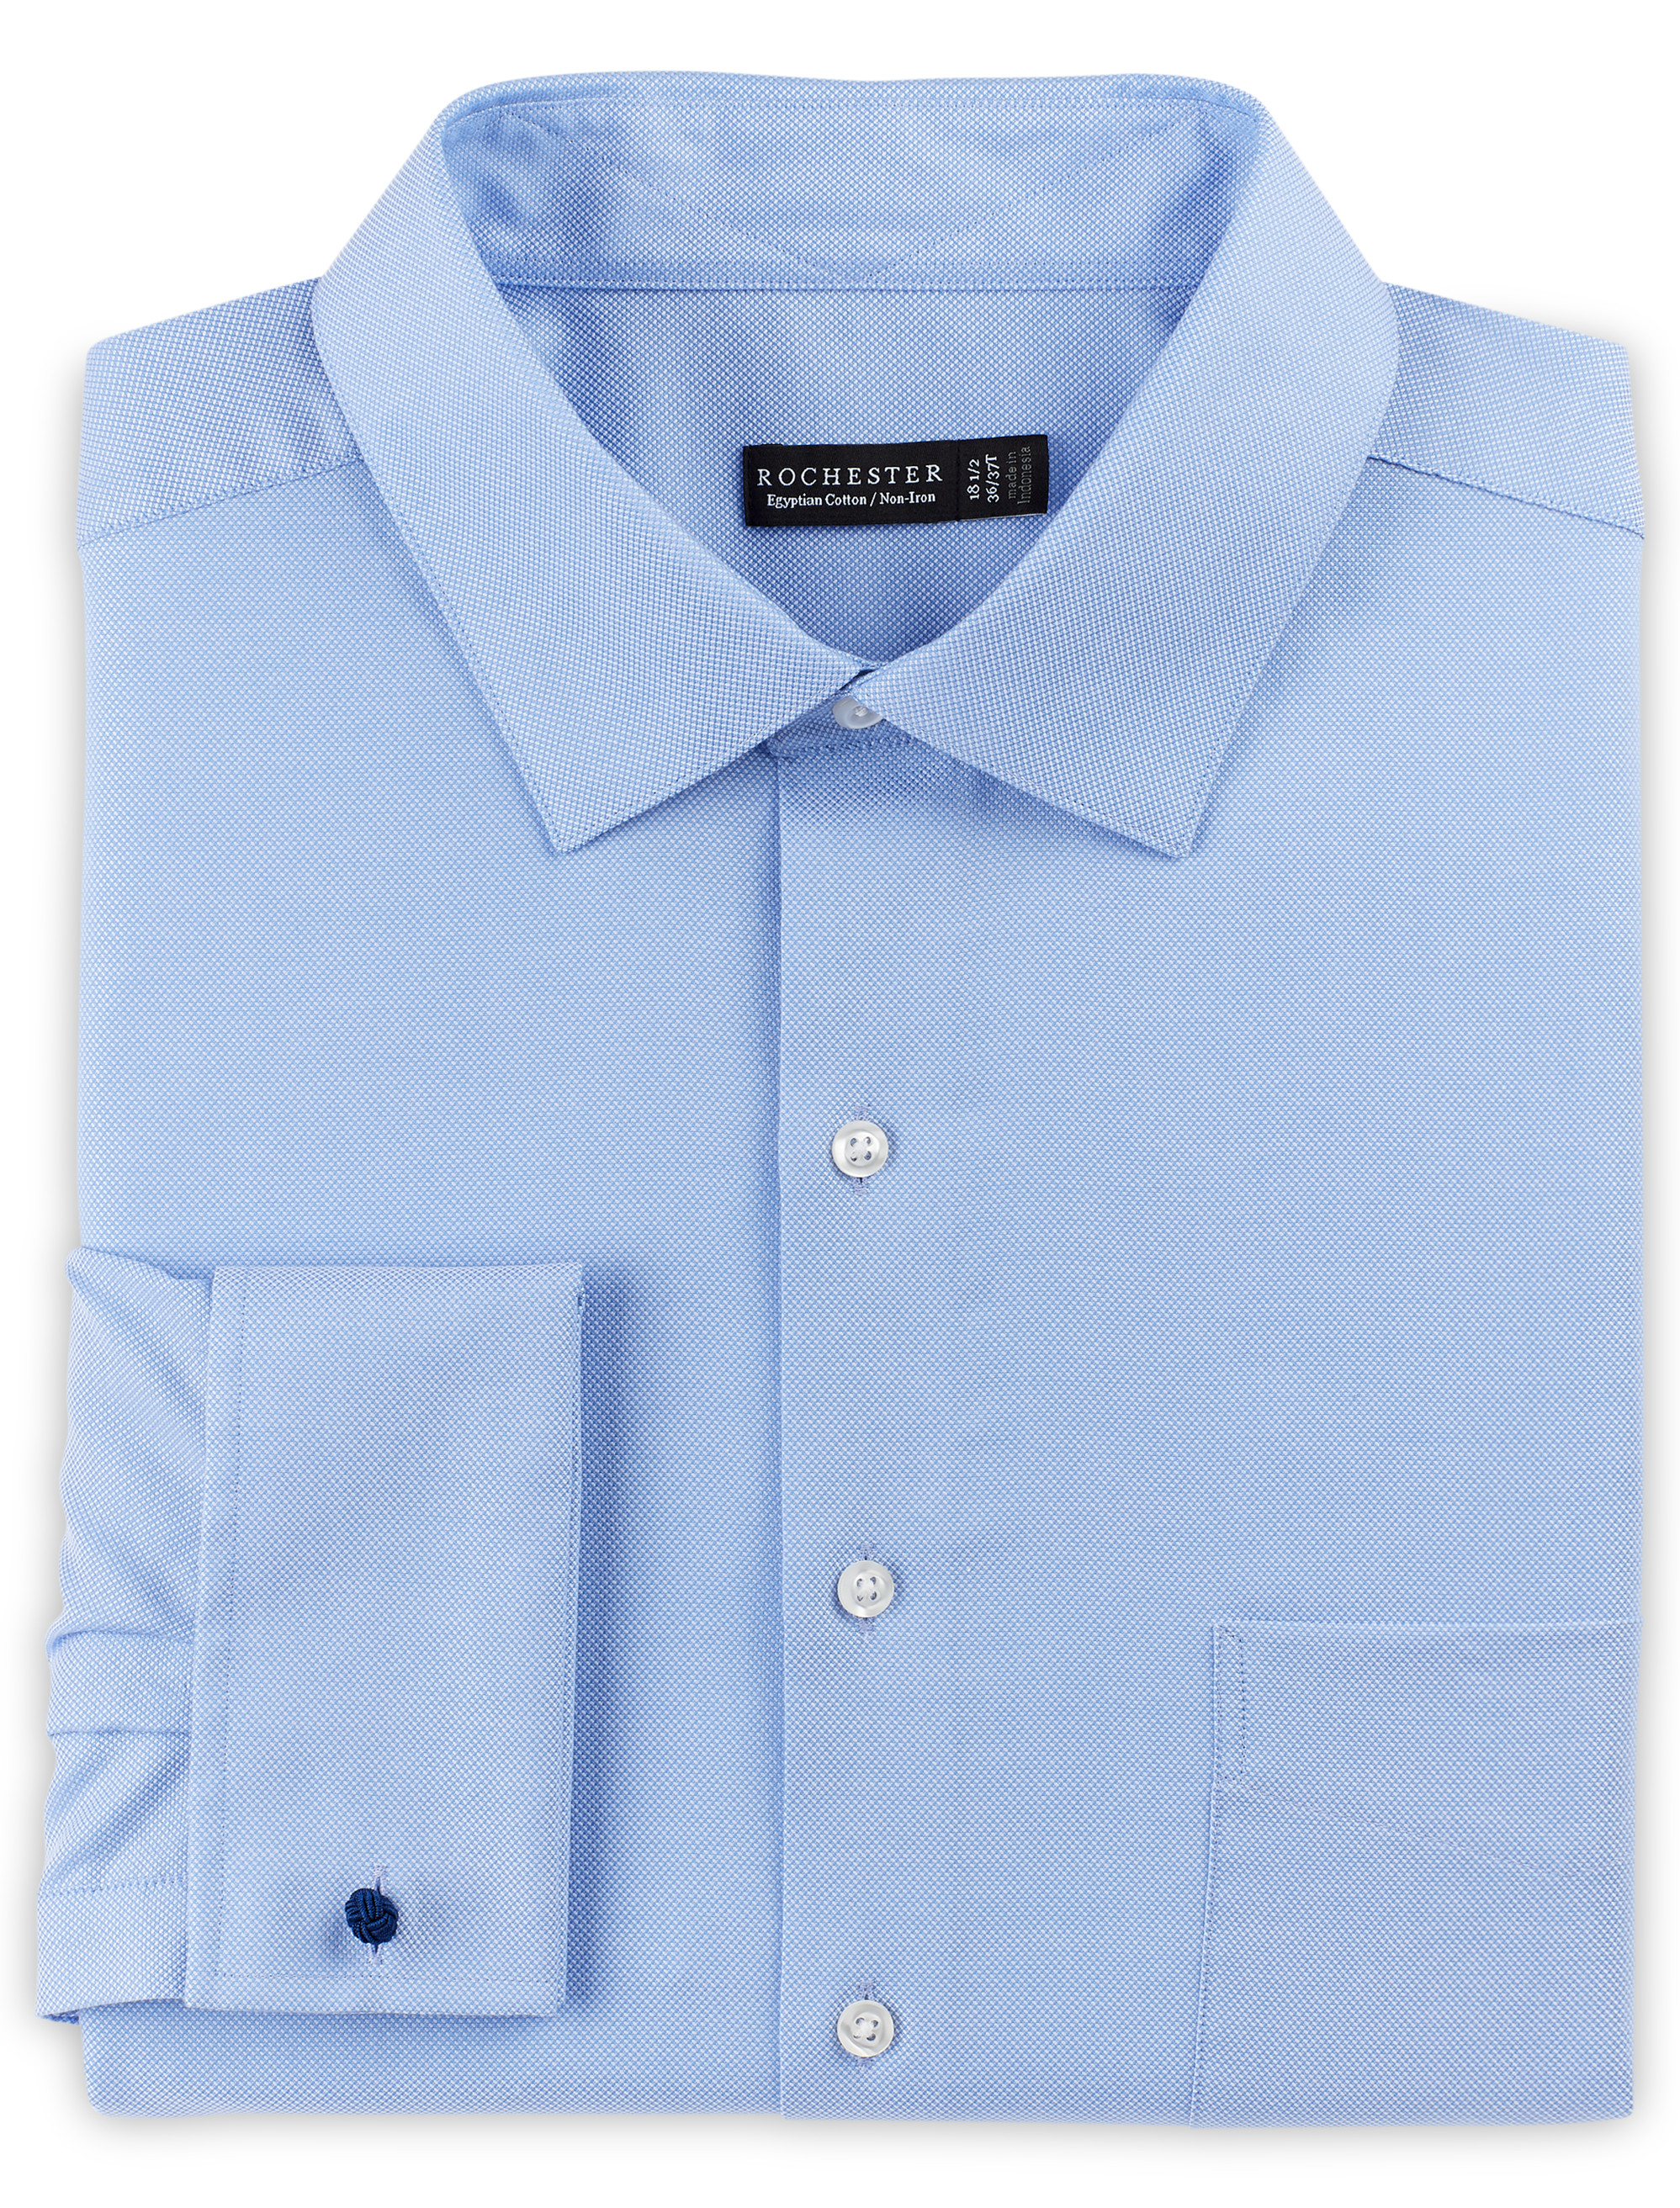 Rochester French-Cuff Oxford Dress Shirt Casual Male XL Big & Tall | eBay